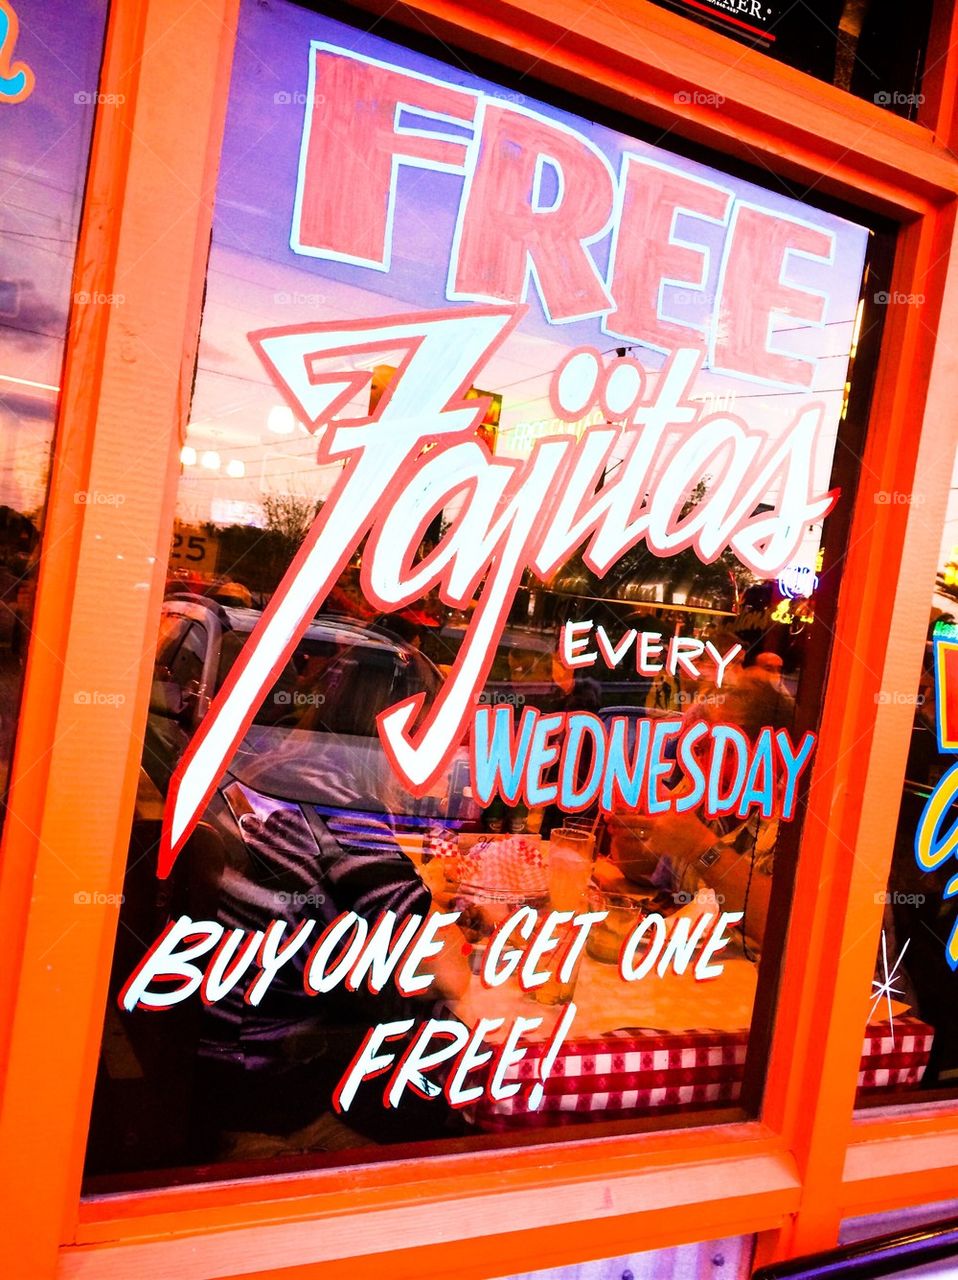 Free Fajitas every Wednesday 